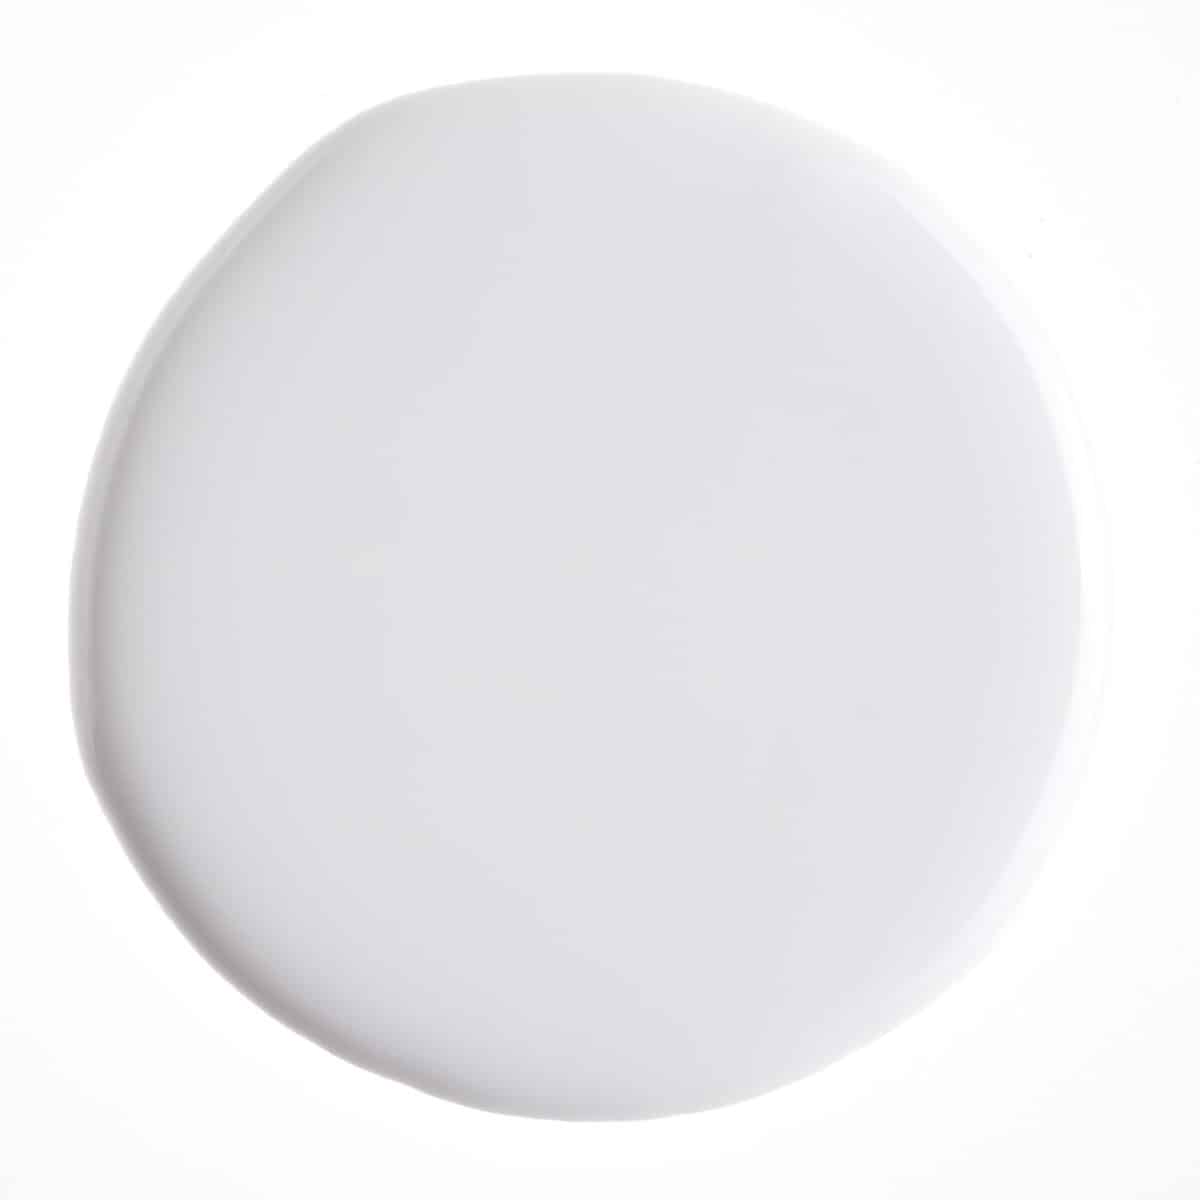 White epoxy pigment